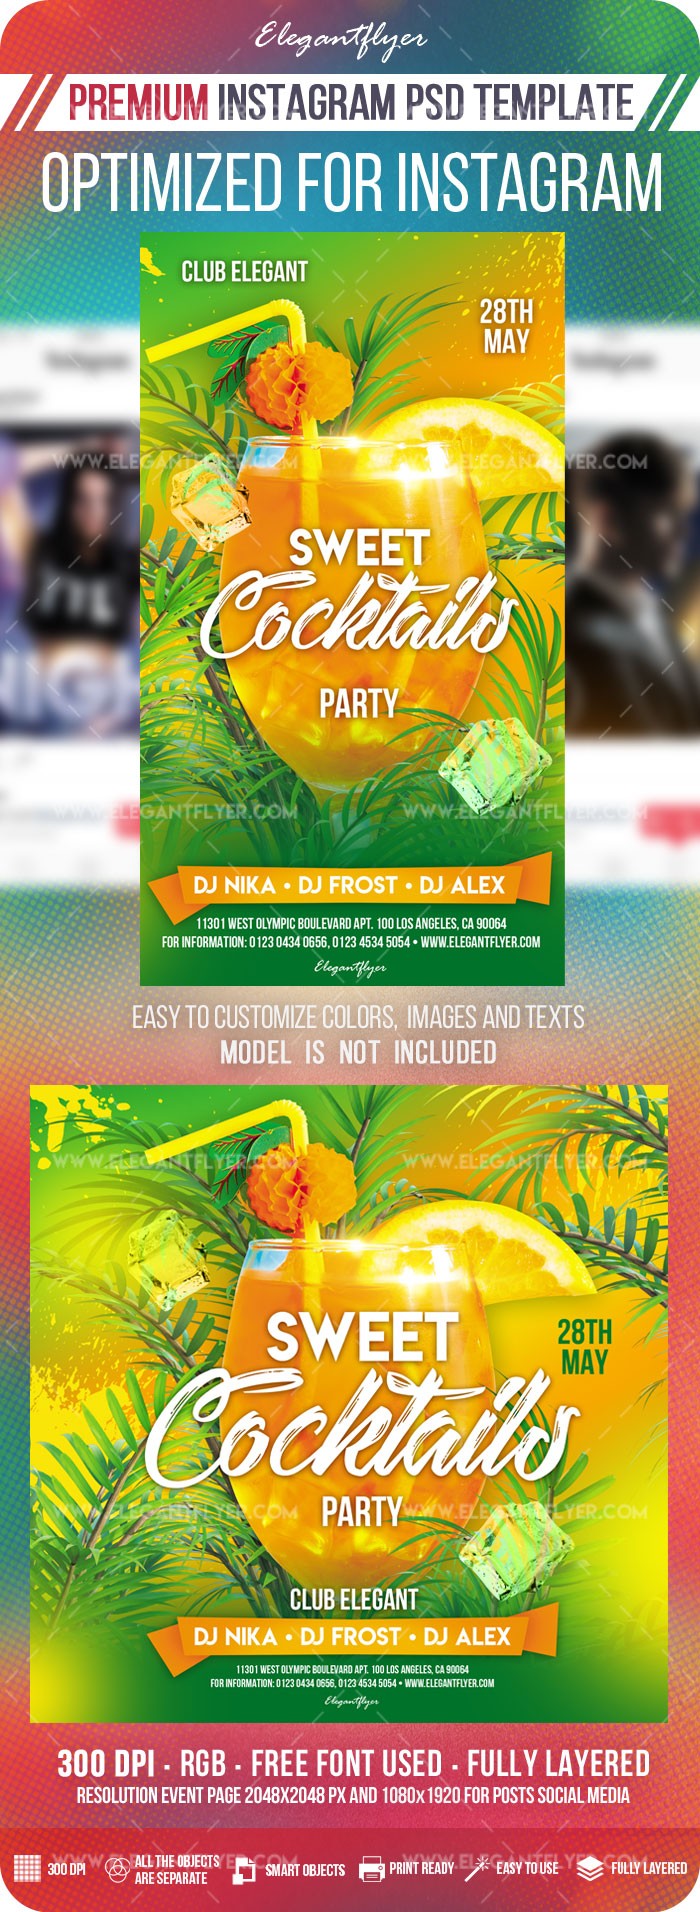 Sweet Cocktails Party Instagram by ElegantFlyer